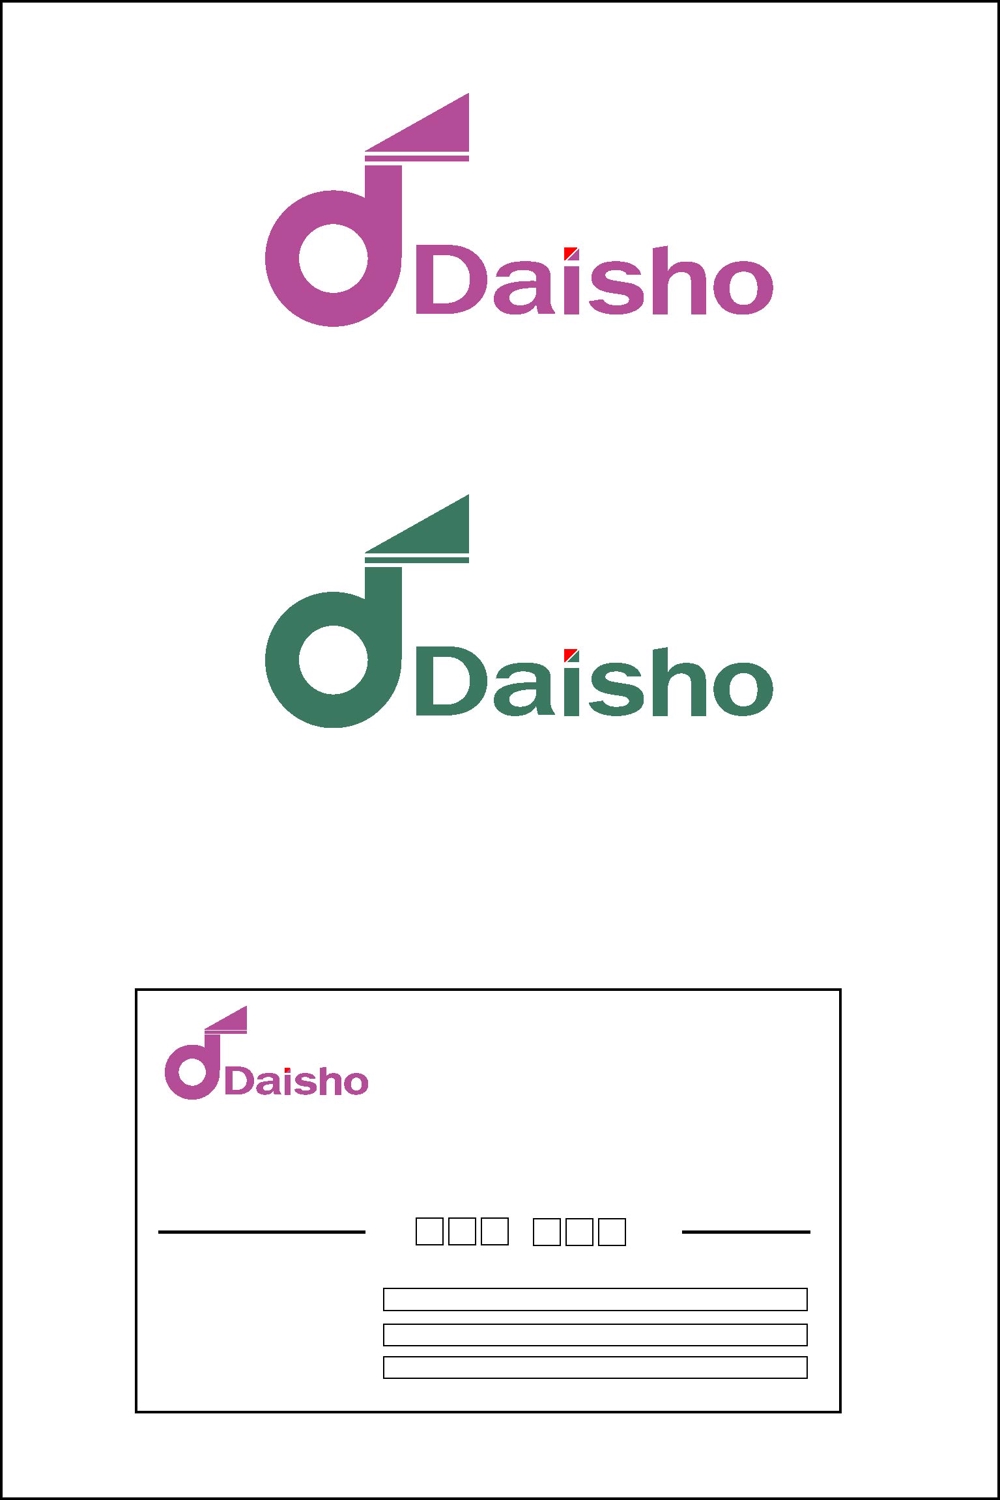 daisho2.jpg